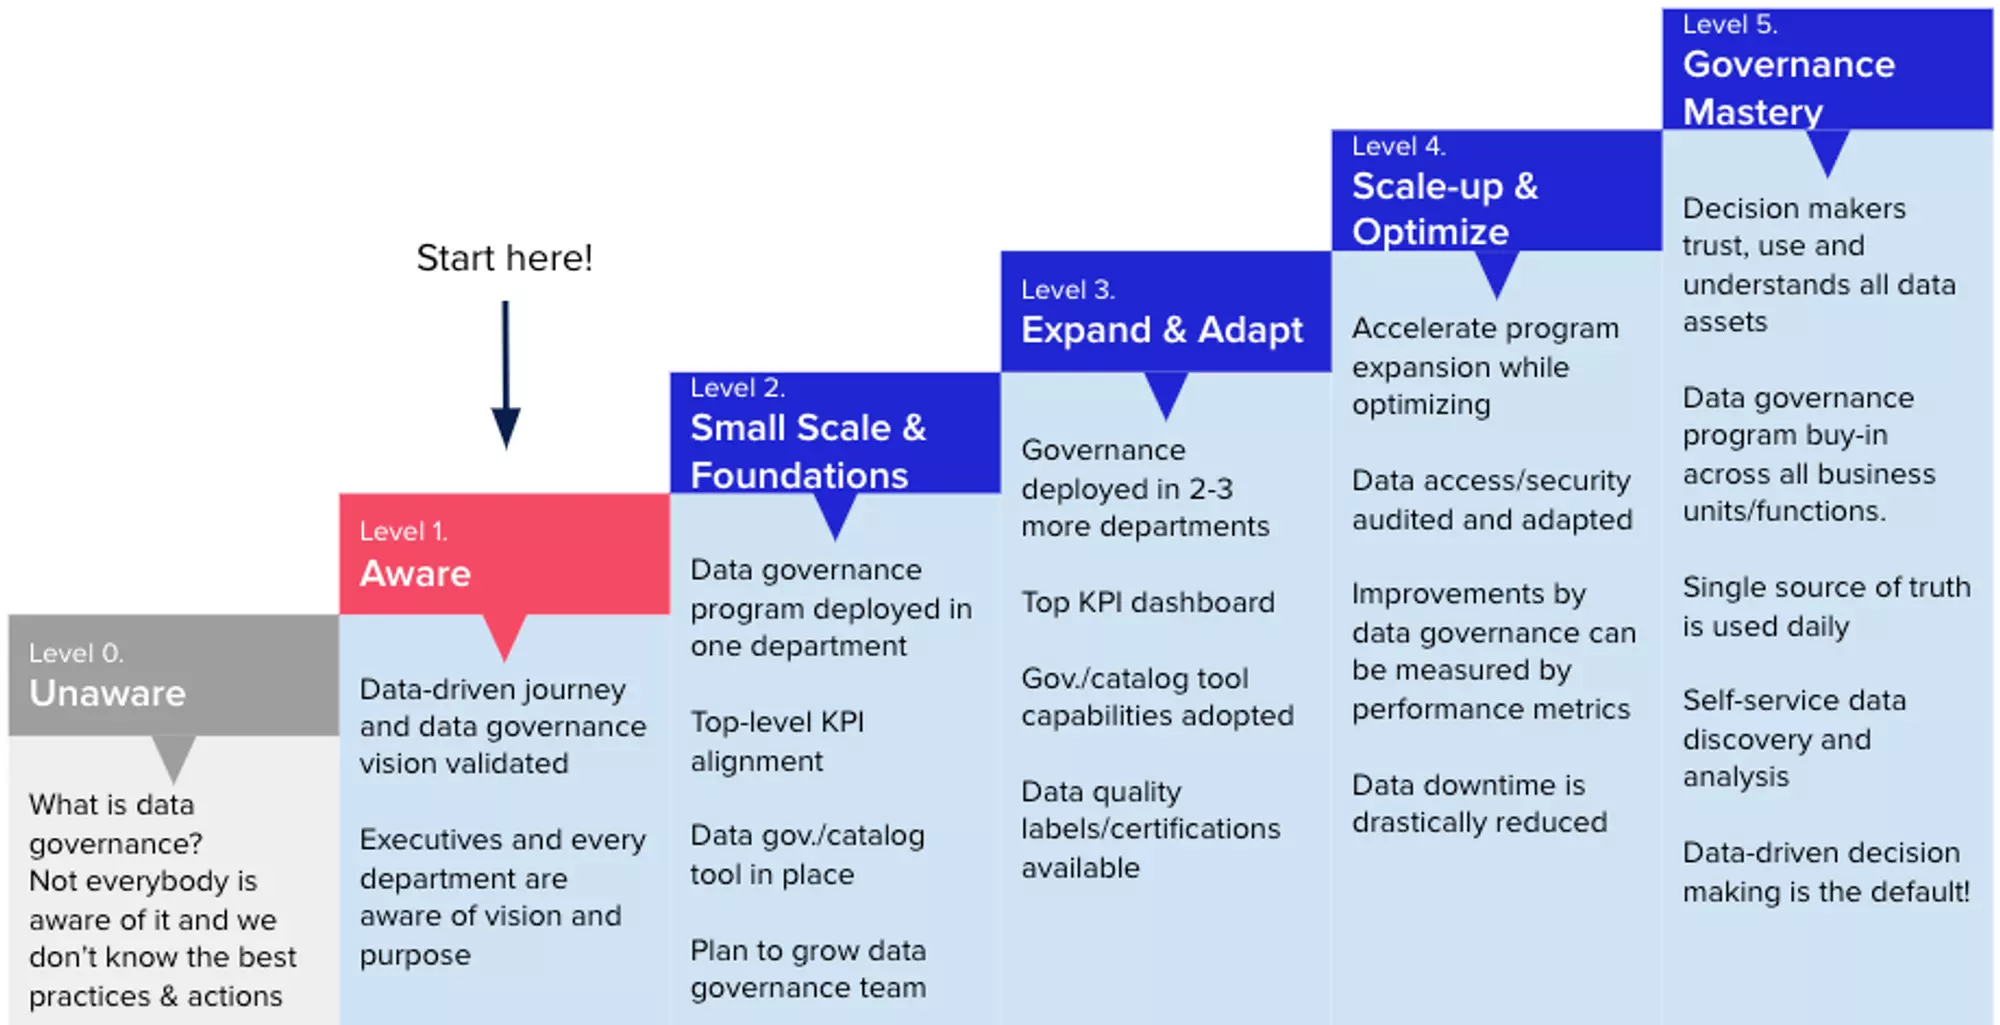 Data governance maturity model